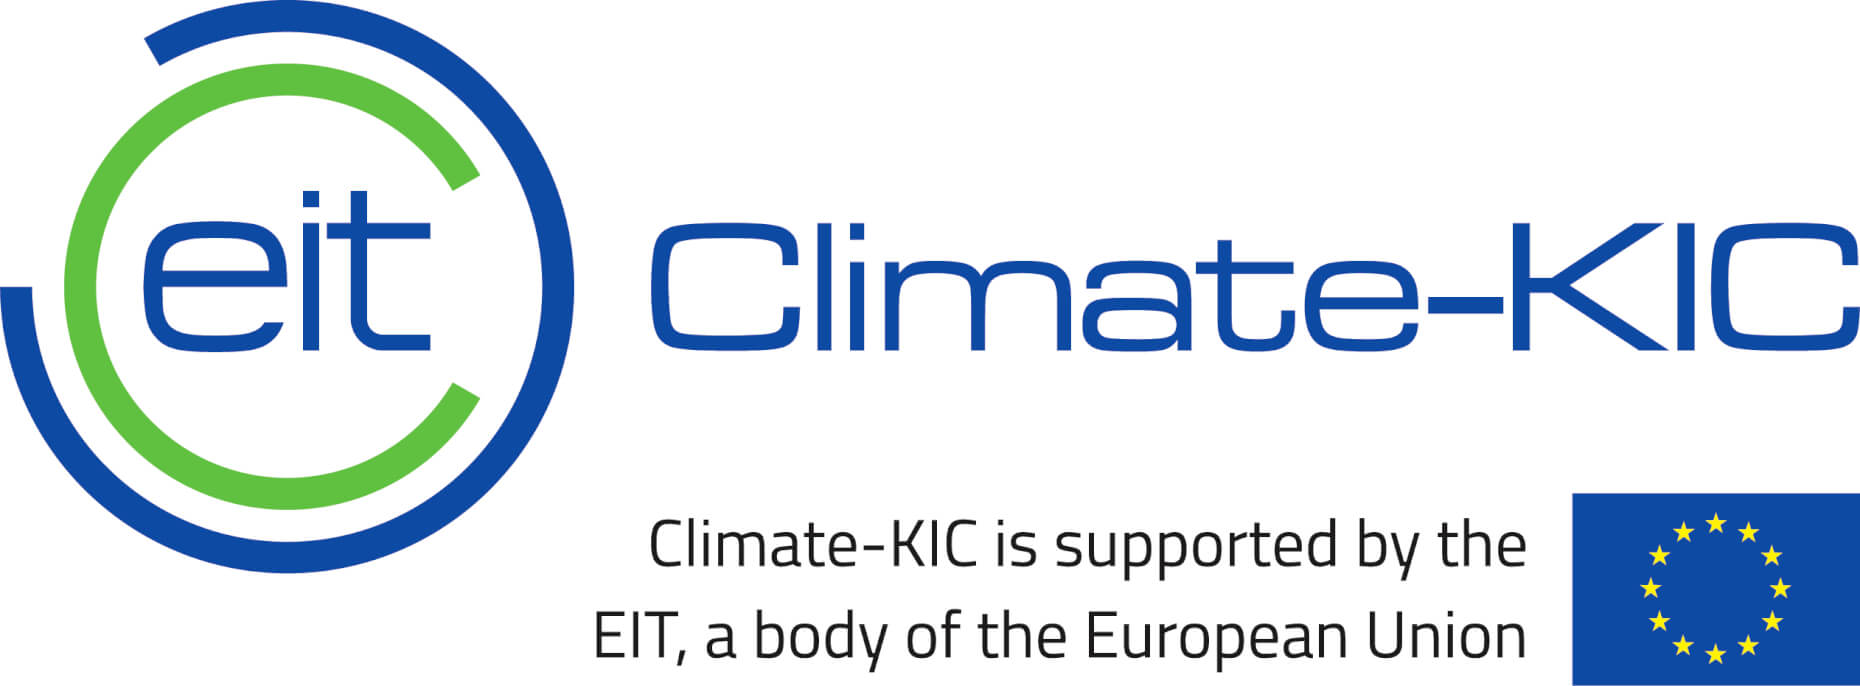 EIT-Climate Kic logo